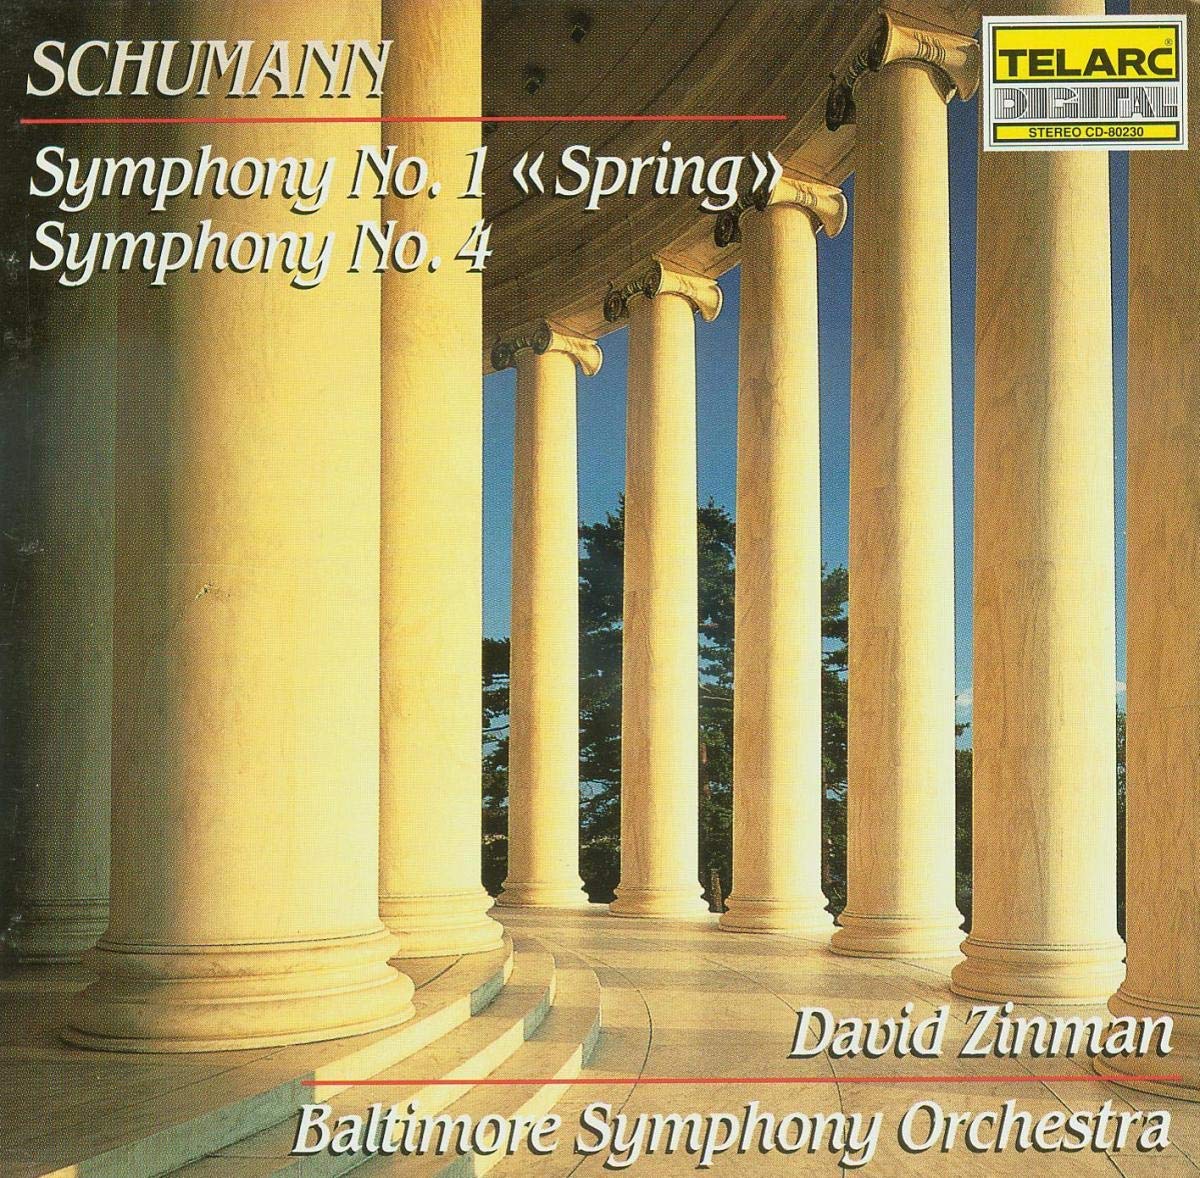 SCHUMANN: SYMPHONIES NO. 1 & 4 - David Zinman, Baltimore Symphony Orchestra